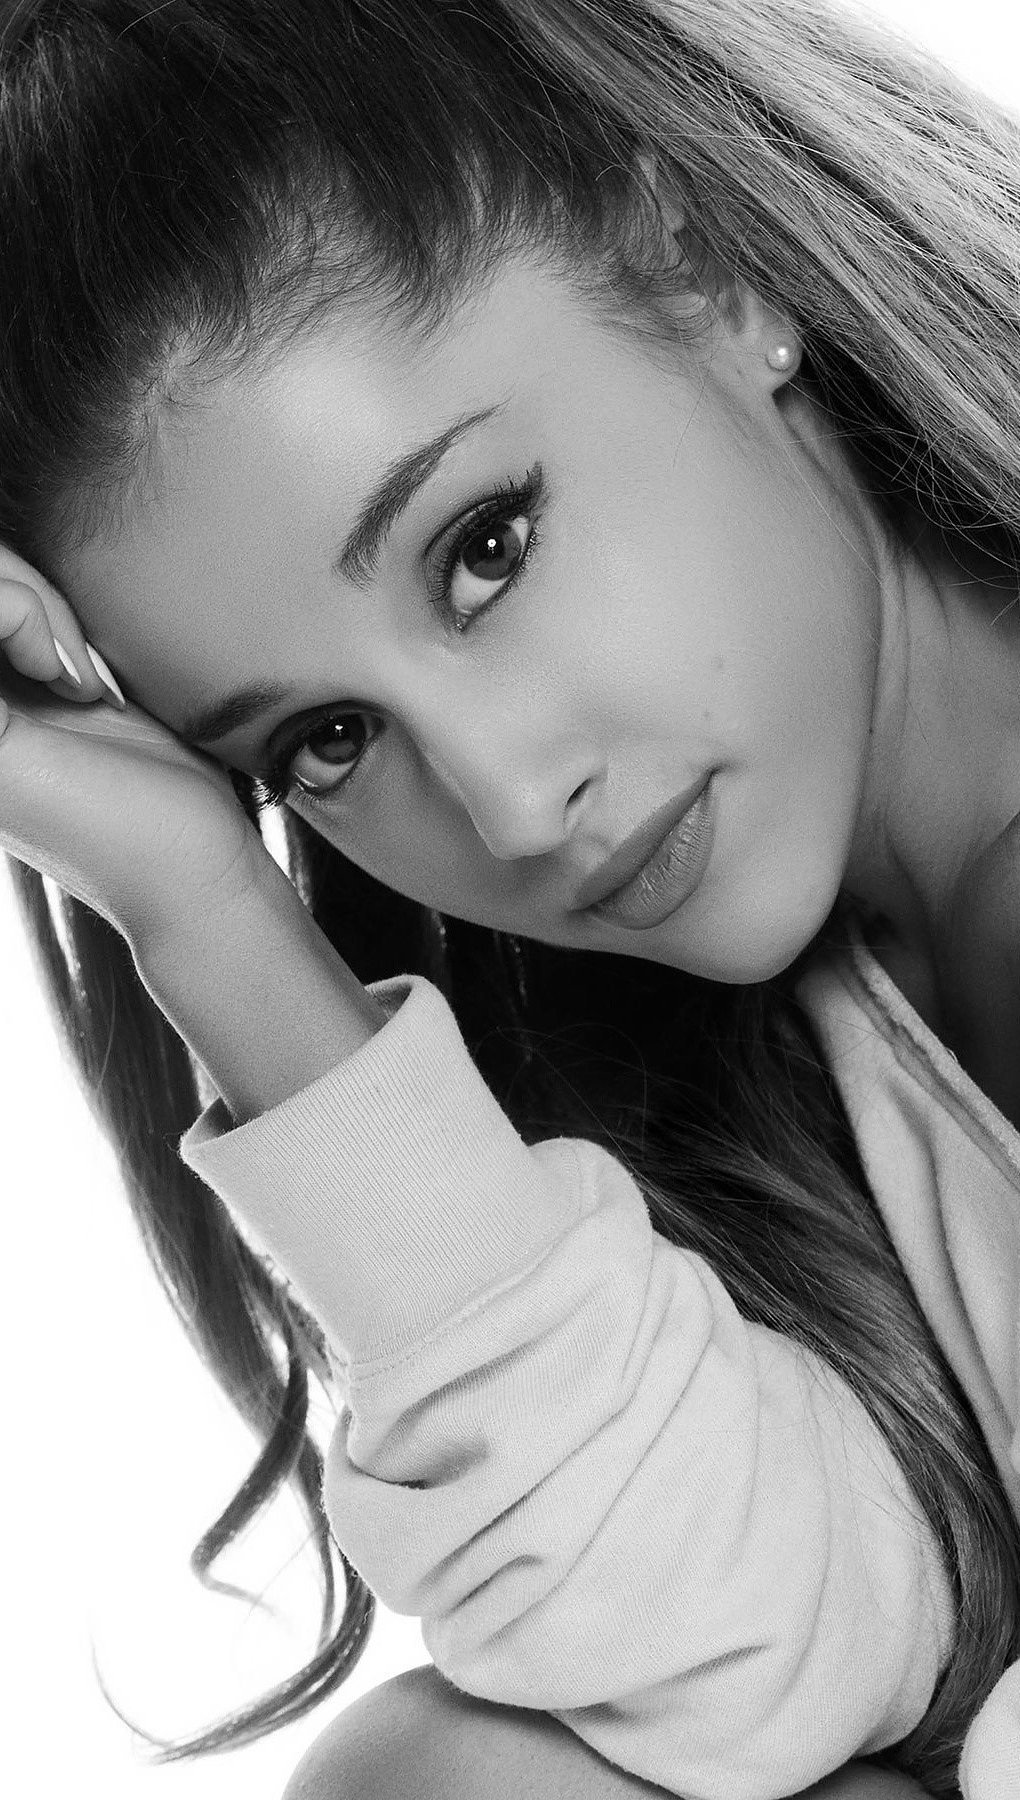 Singer Ariana Grande Wallpapers